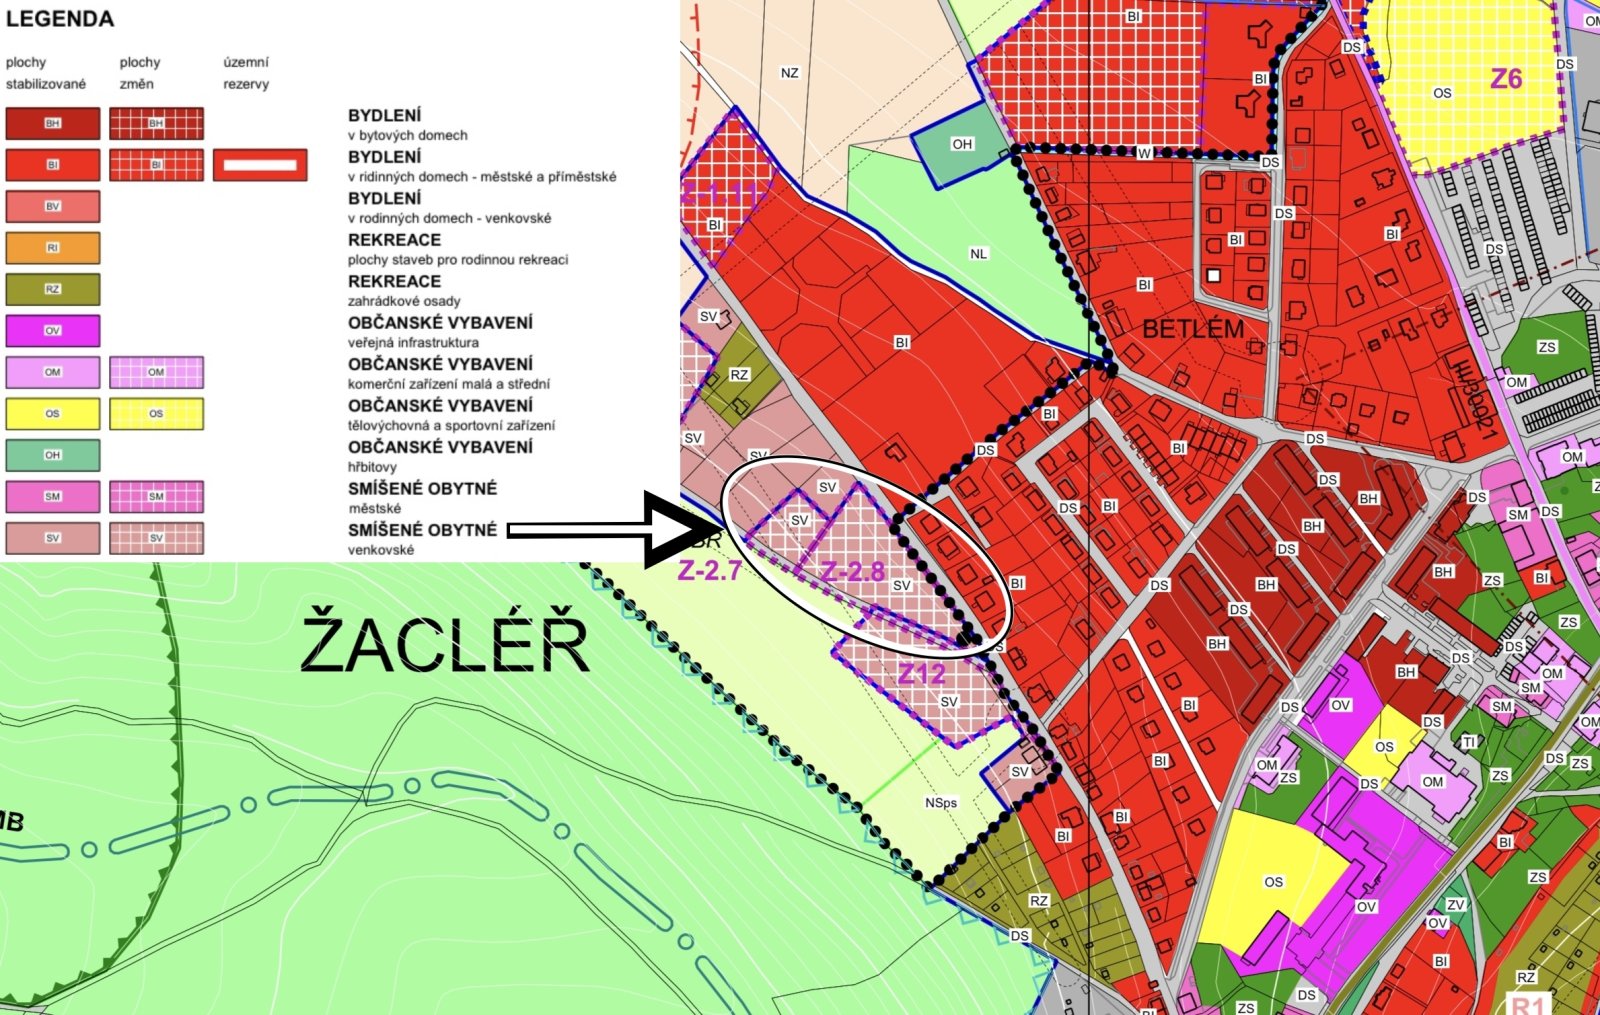 Prodej stavebních pozemků - Žacléř - Bobr - Trutnov